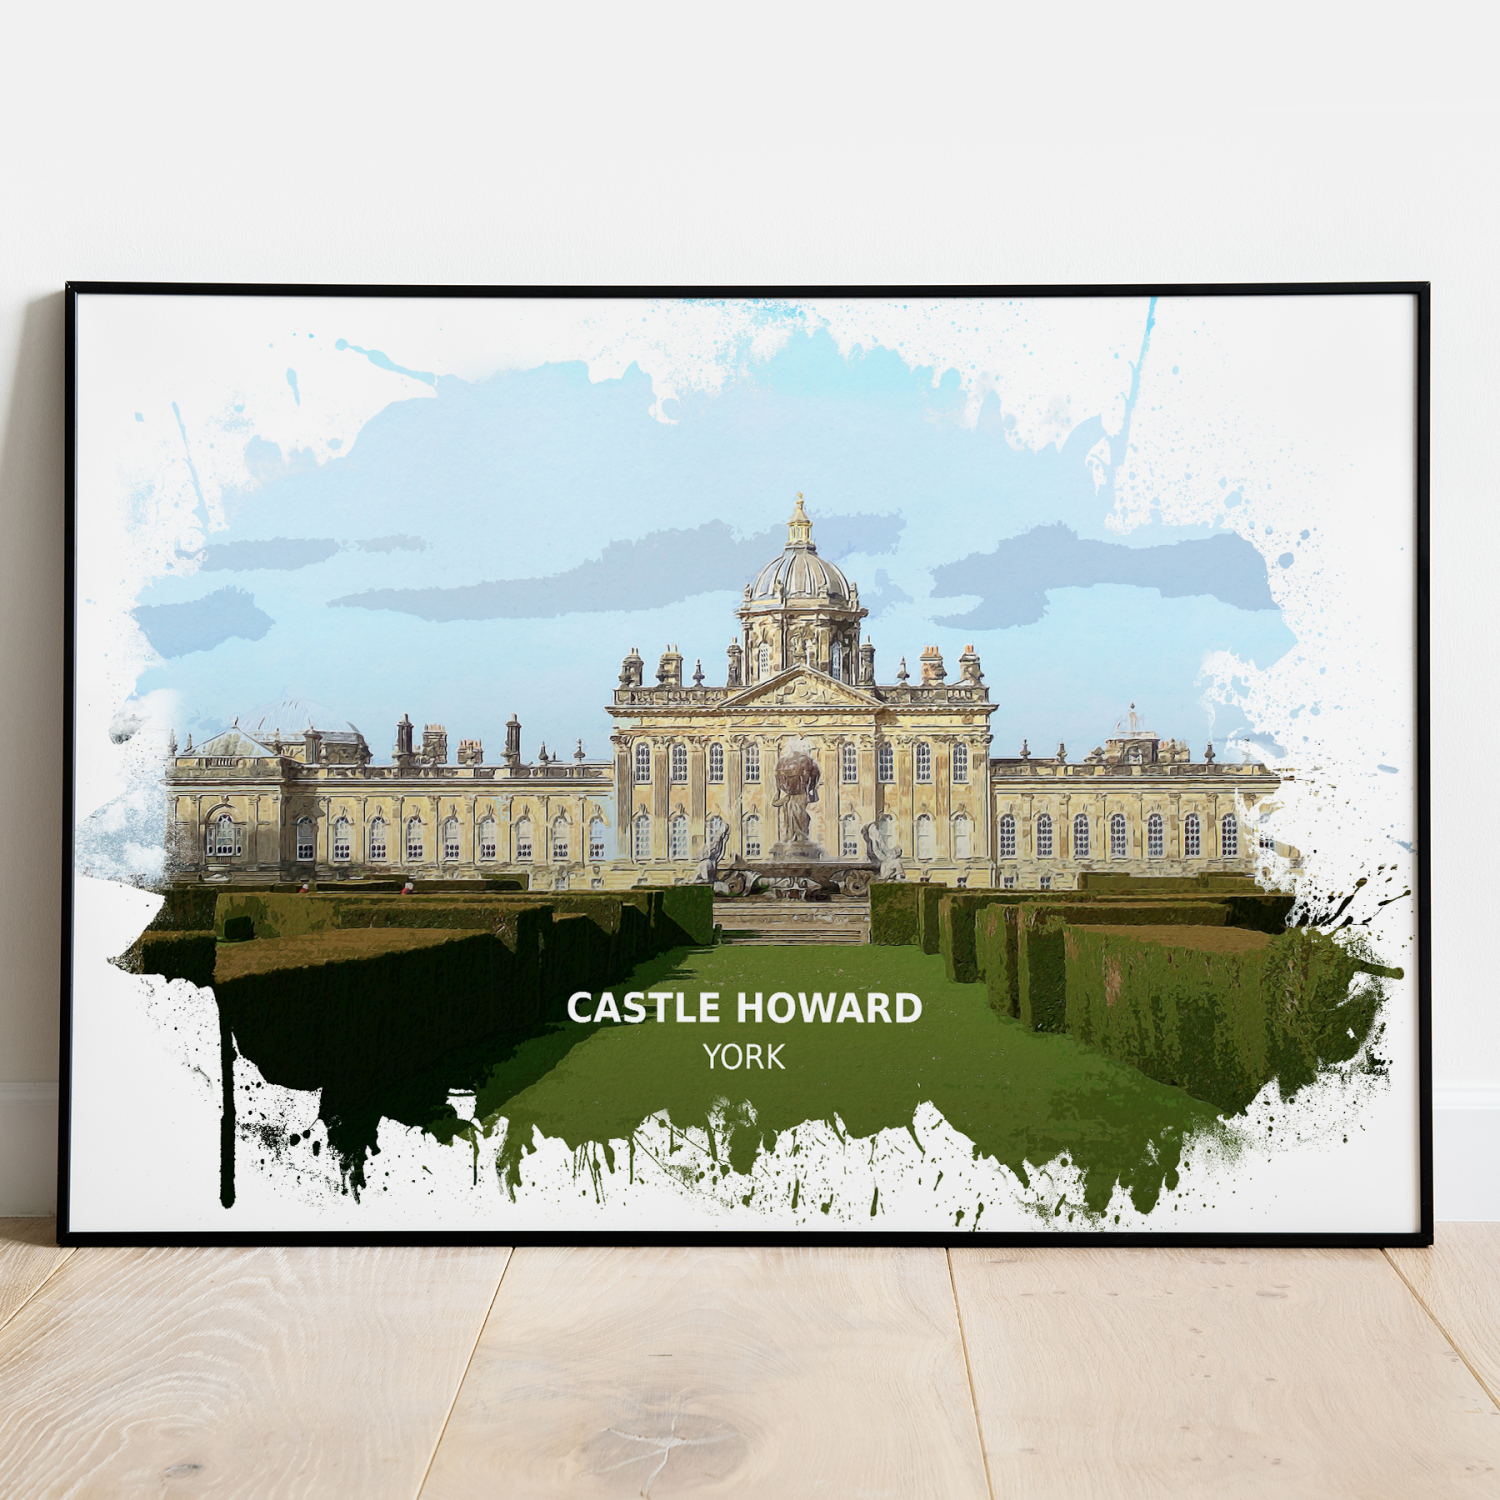 Castle Howard - York - Print - A4 - Standard - Print Only